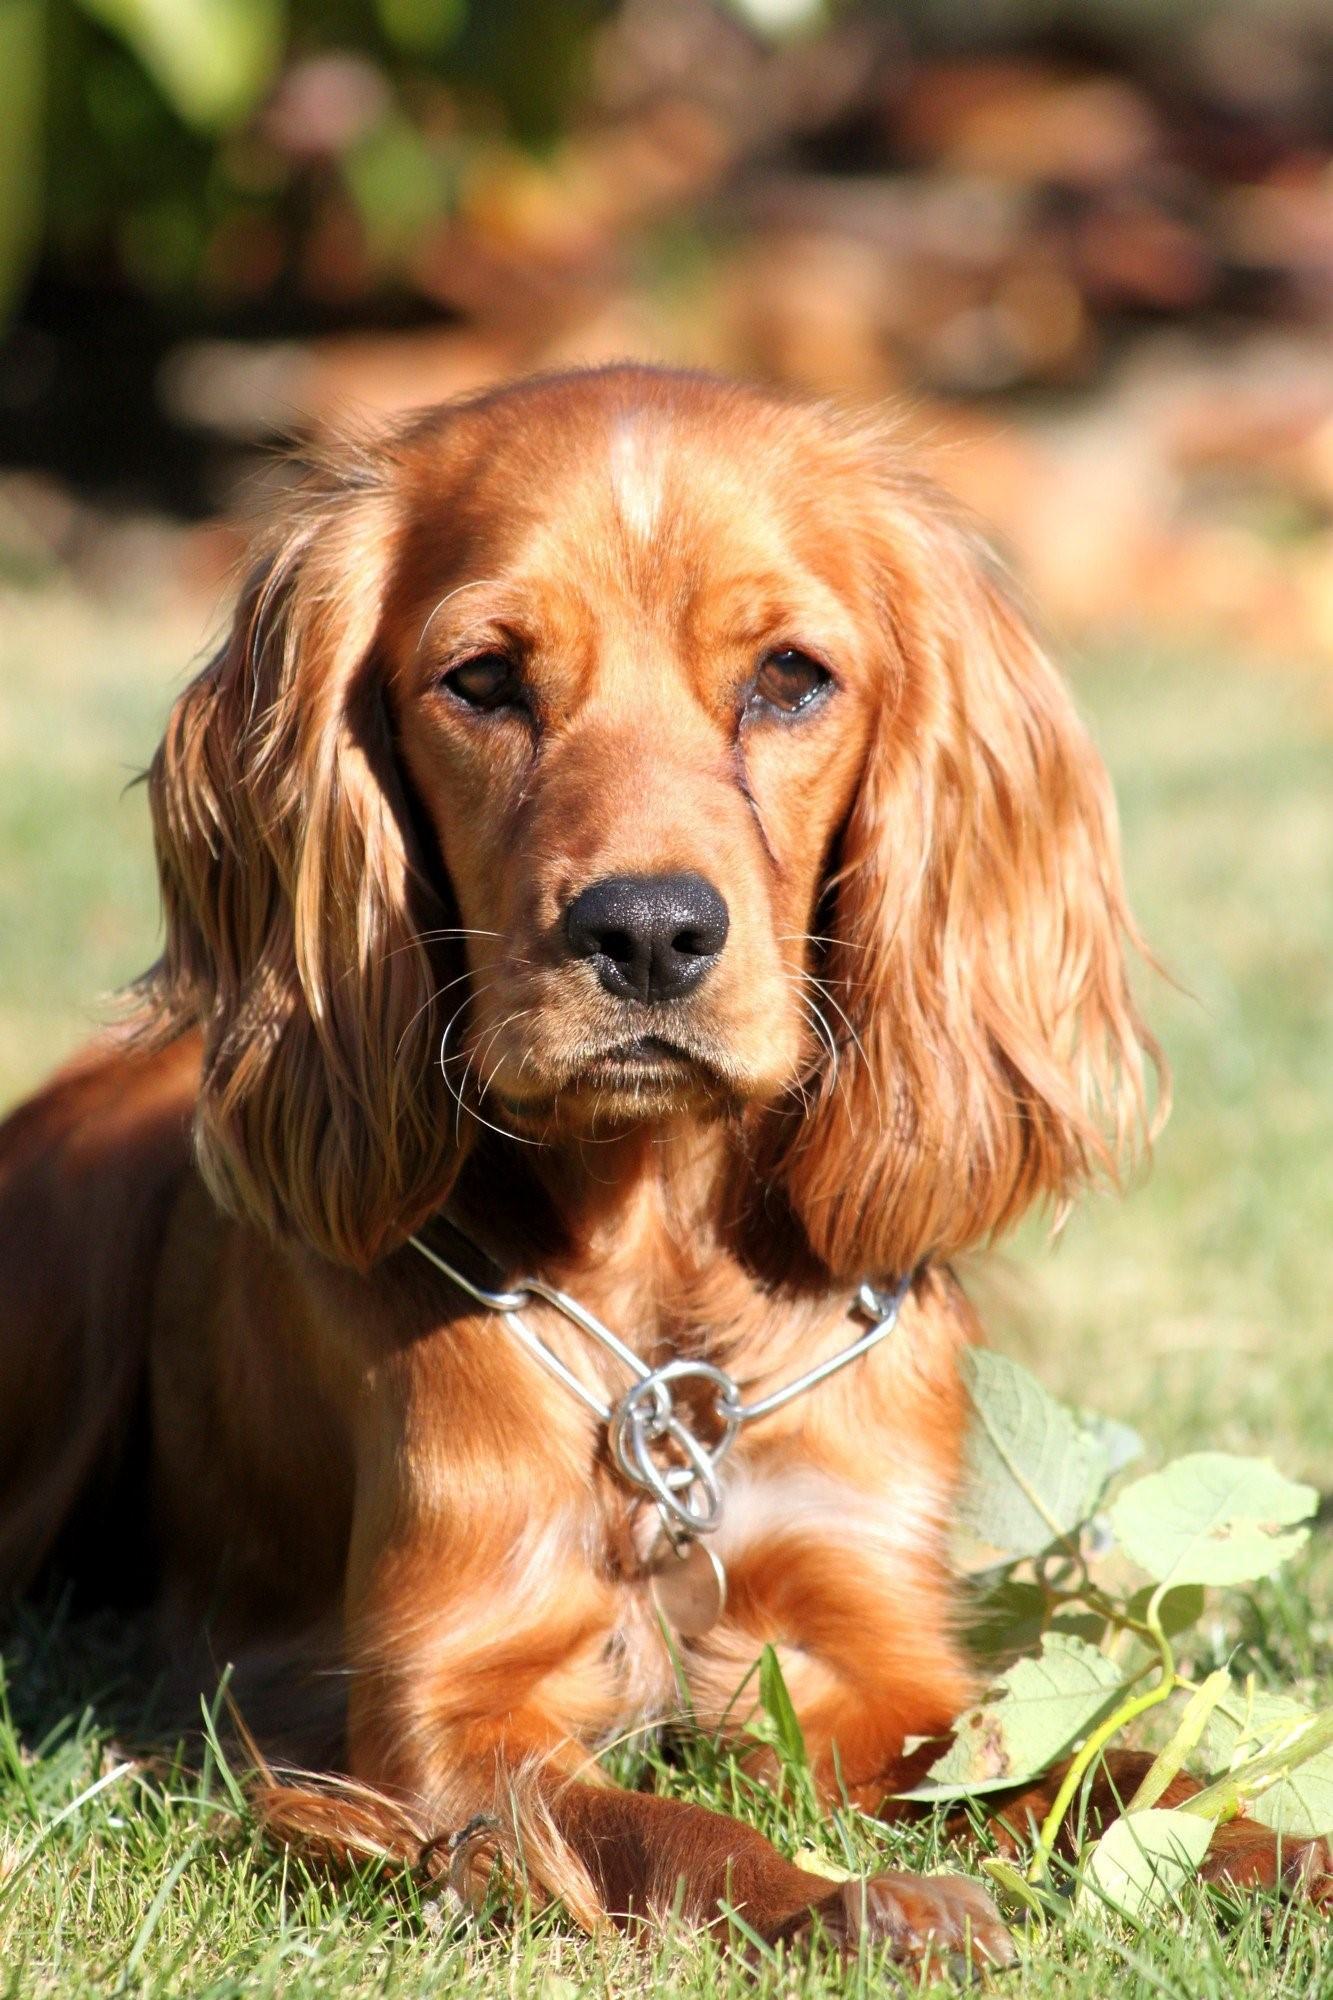 Порода собак с висячими ушами название и фото